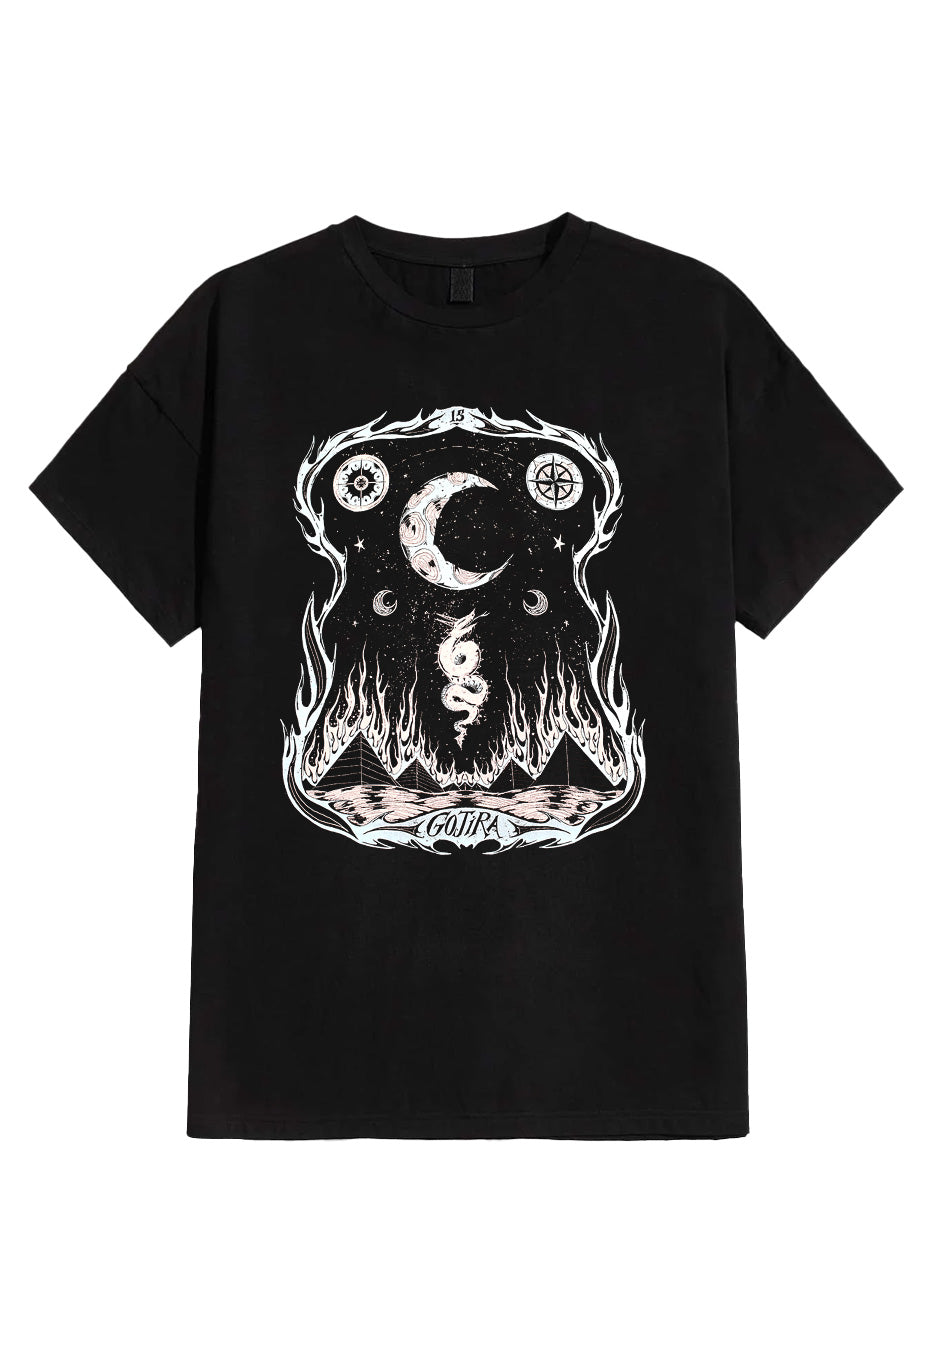 Gojira - Dragons Dwell - T-Shirt